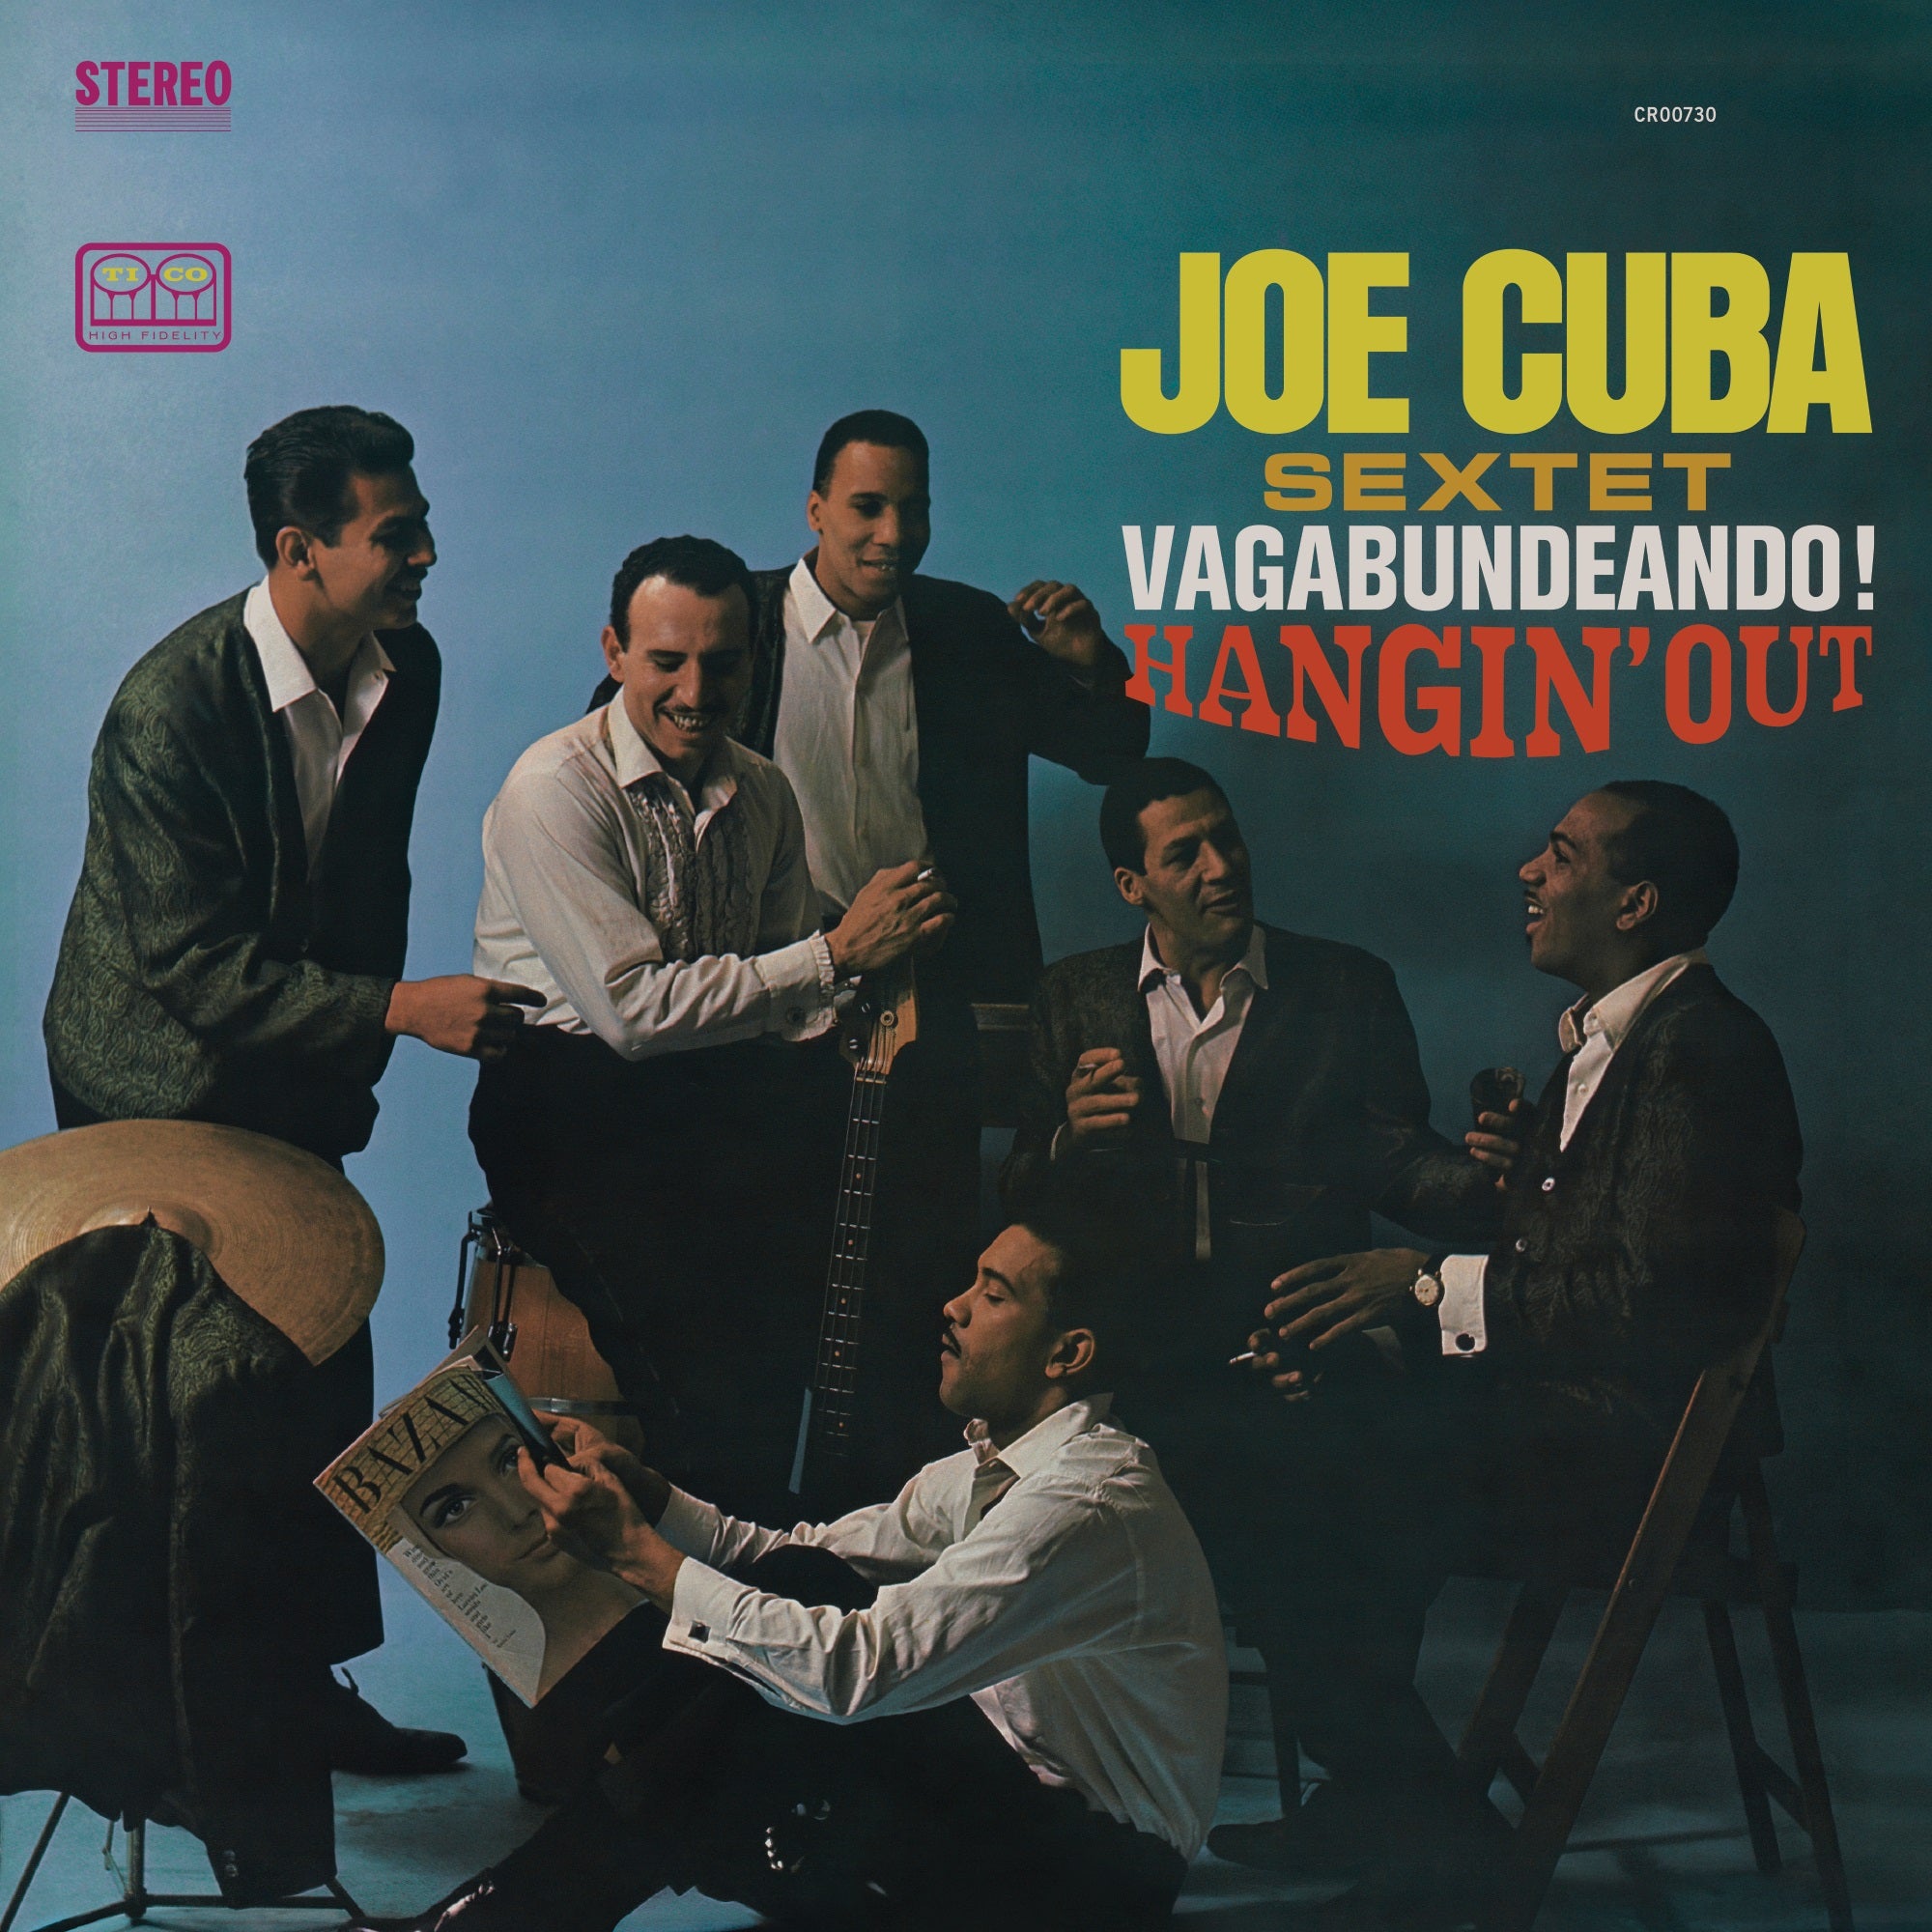 Joe Cuba Sextet - Vagabundeando! Hangin' Out